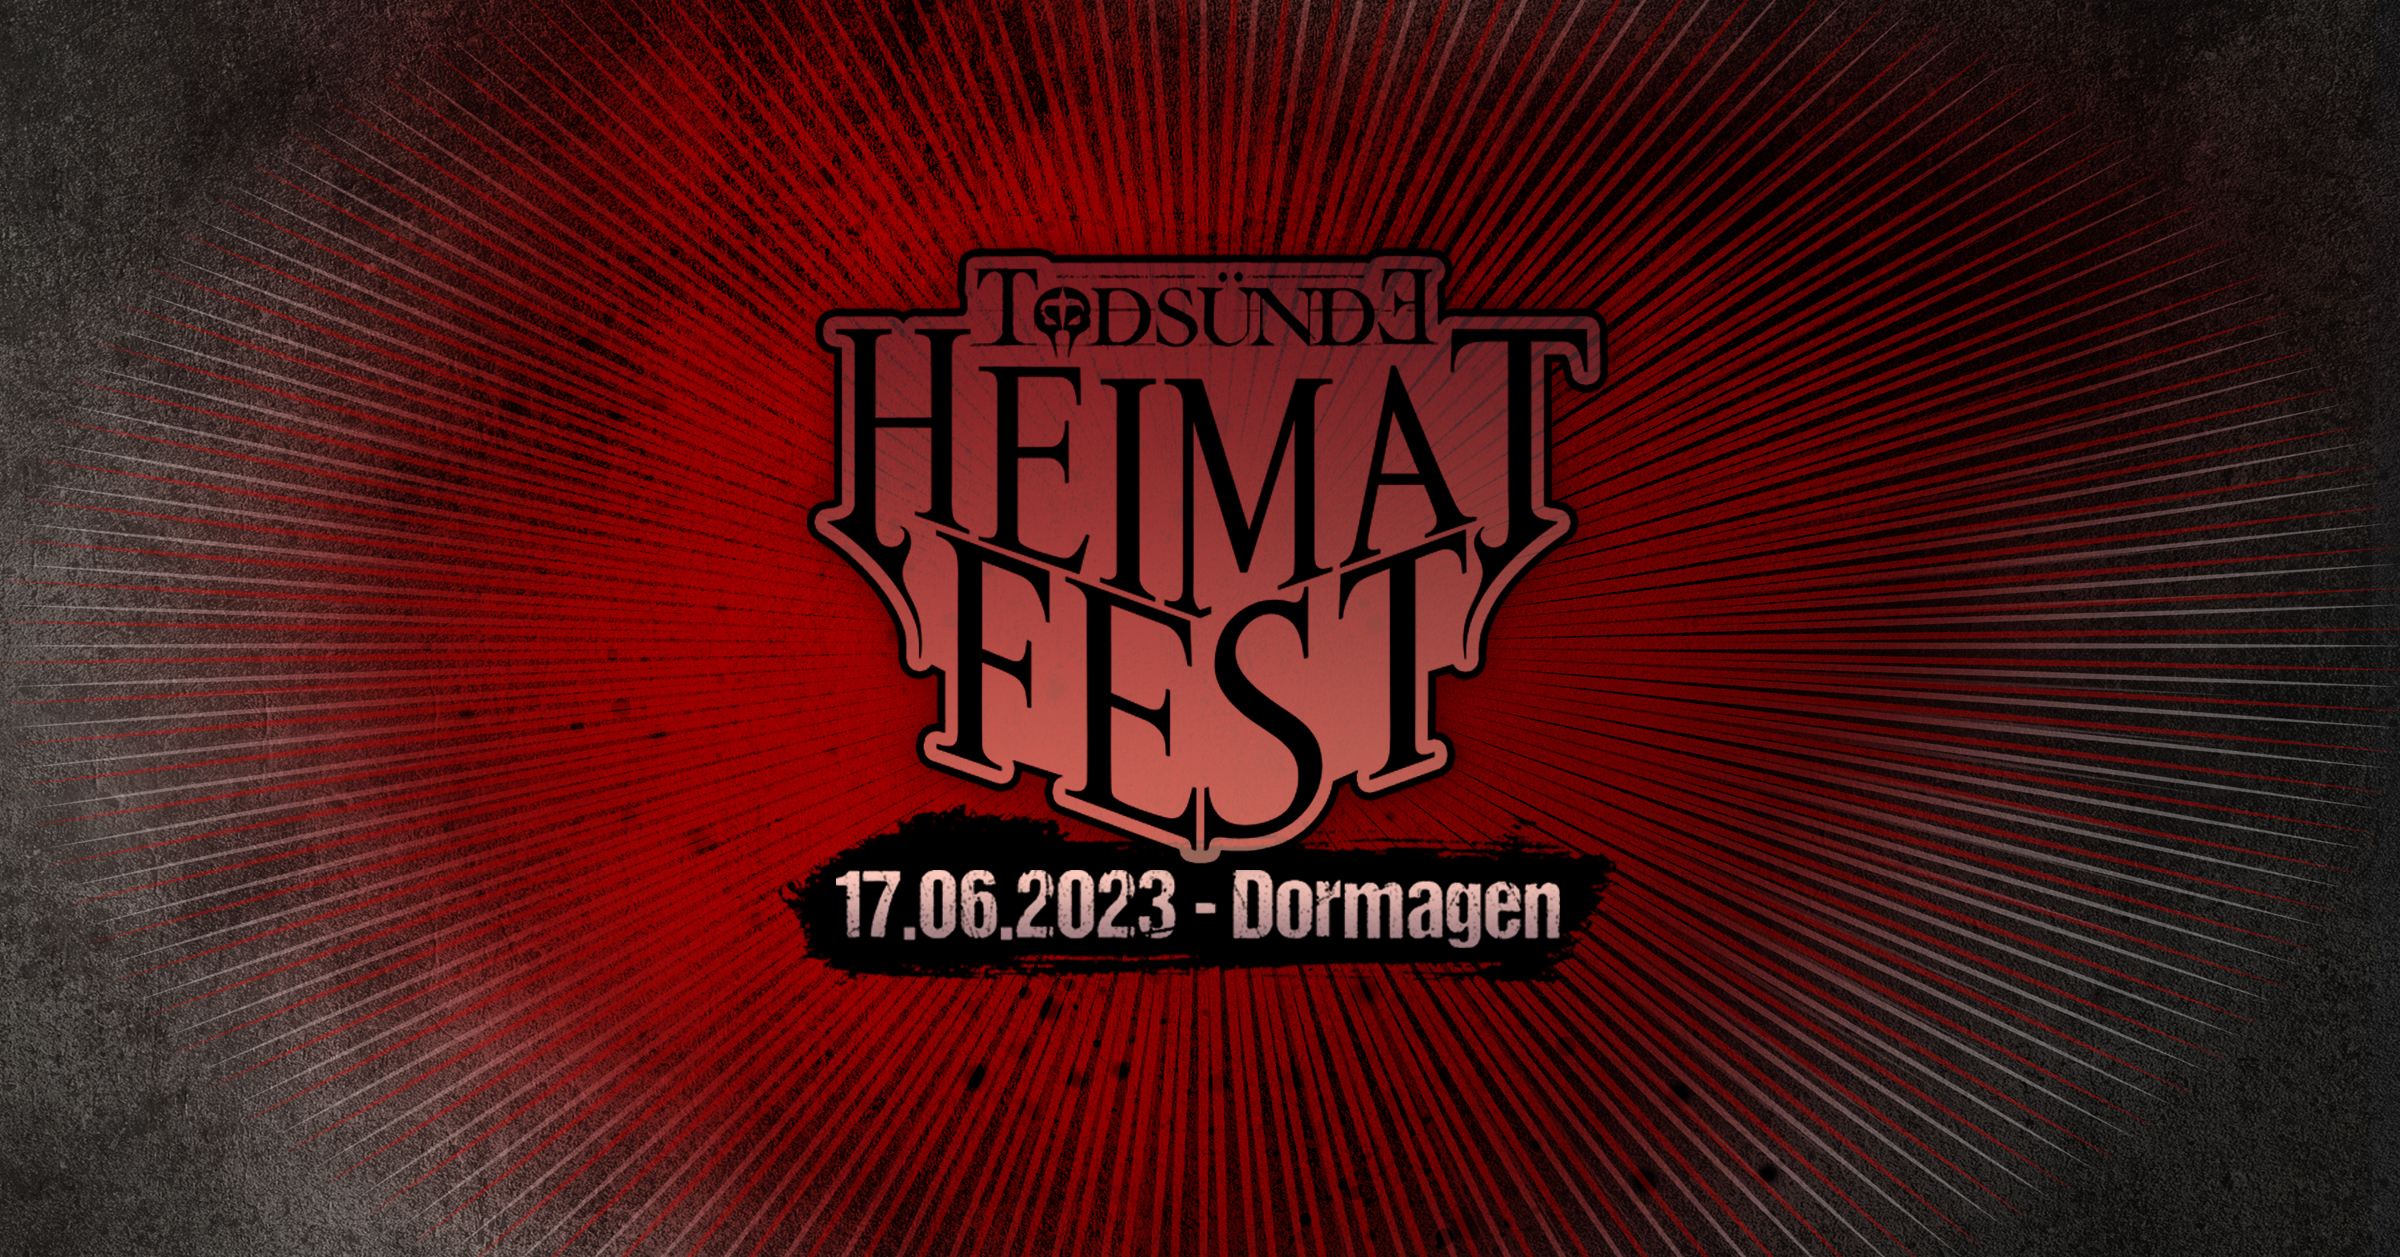 Heimatfest 2023 - 0 € Ticket